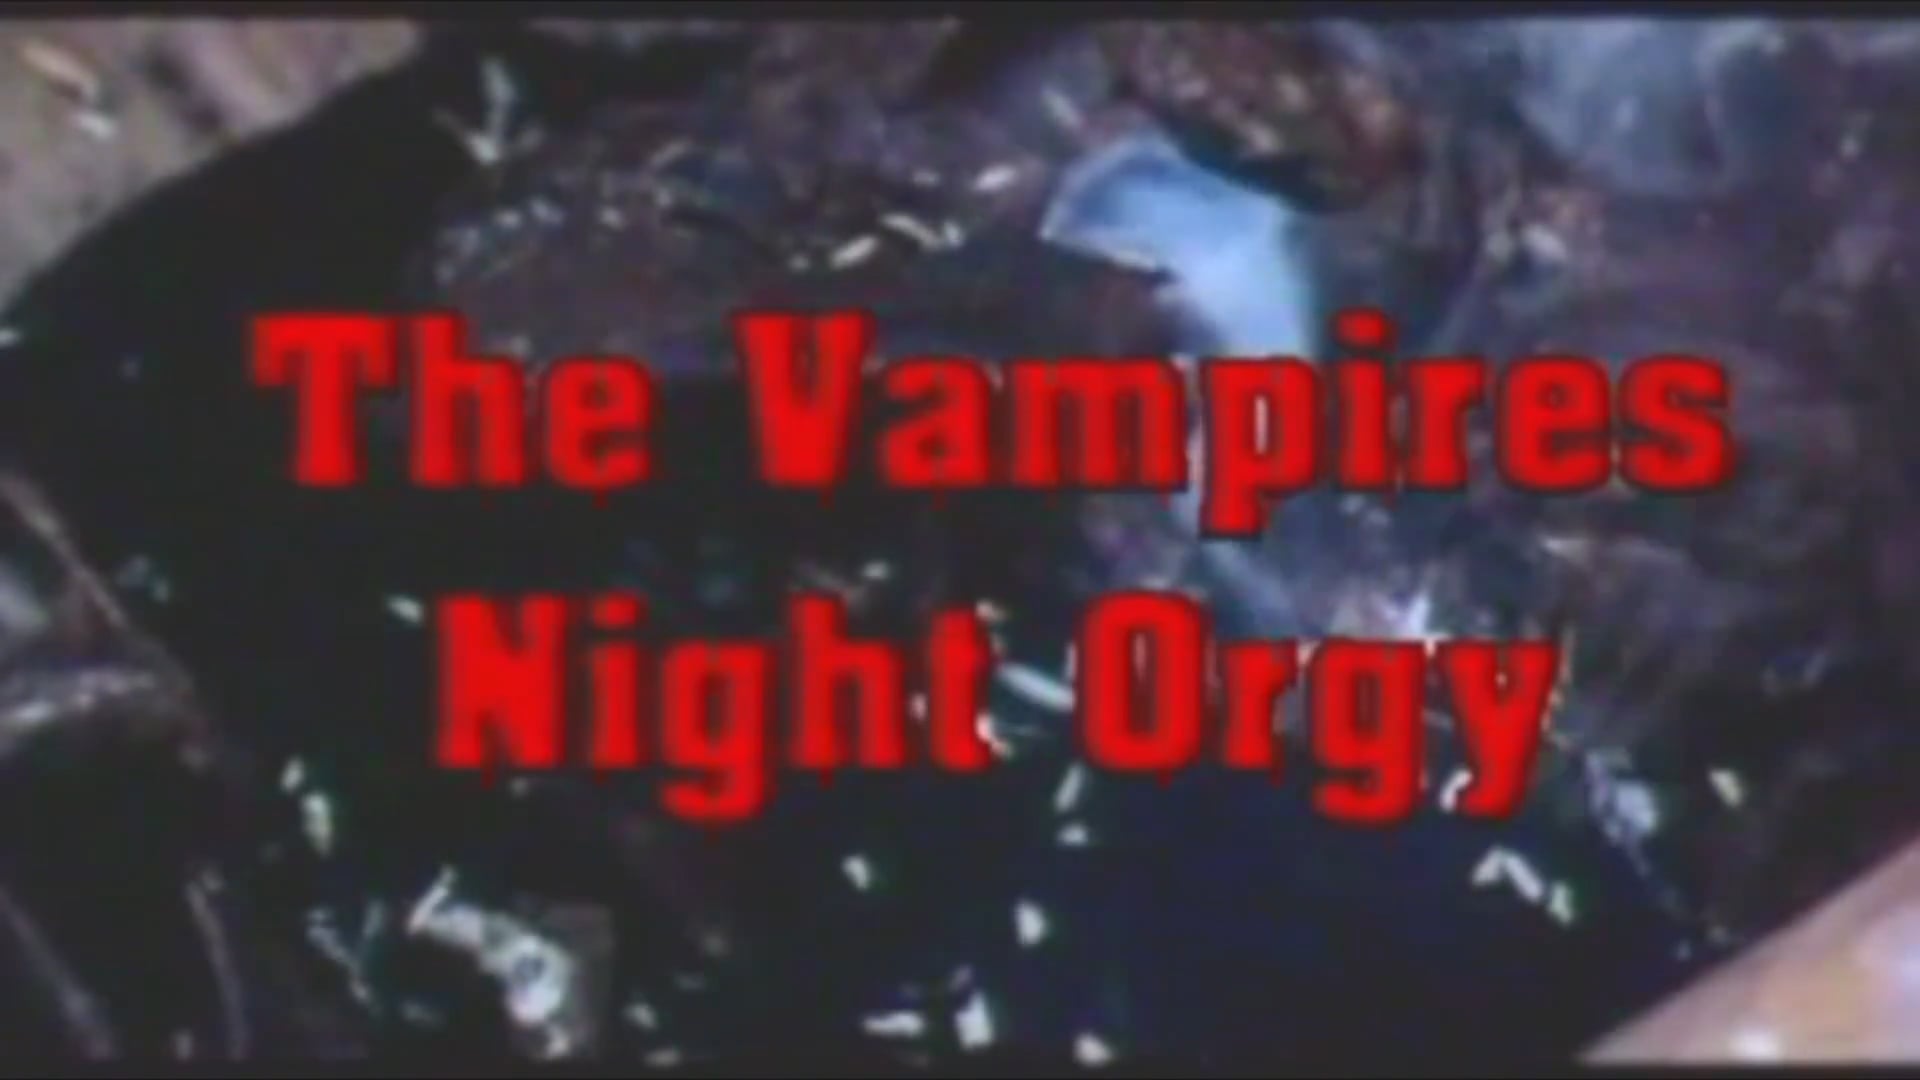 Vampires Night Orgy On Vimeo